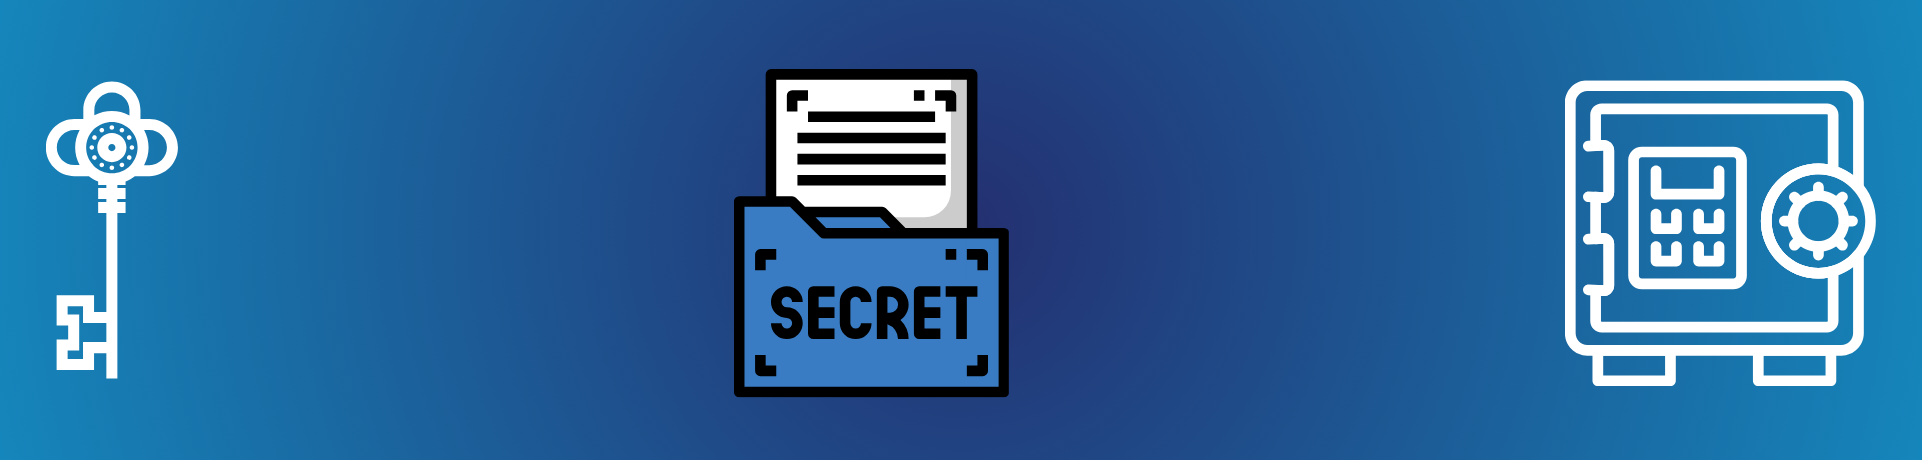 Secrets management with Azure Key Vault Image